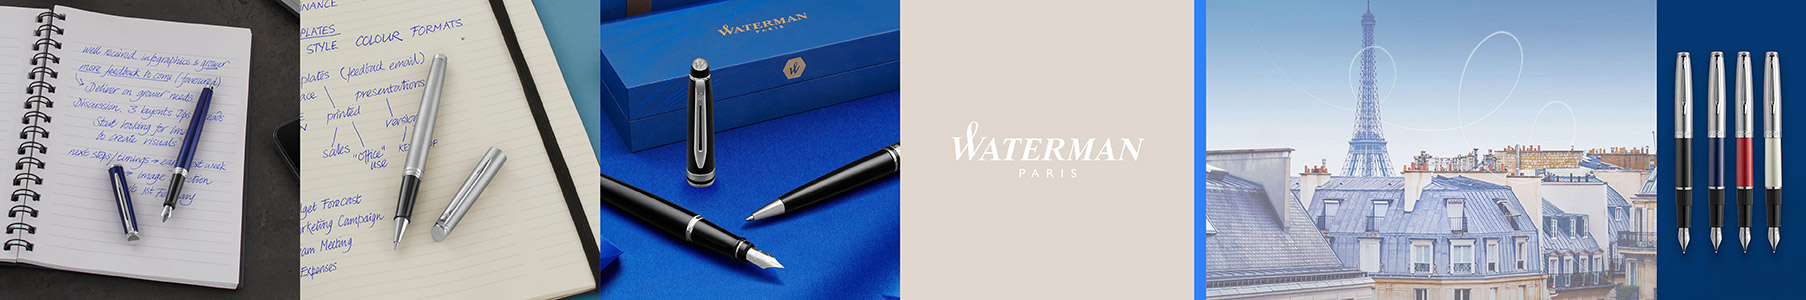 Waterman Paris, luxusní pera, reklamní.jpg